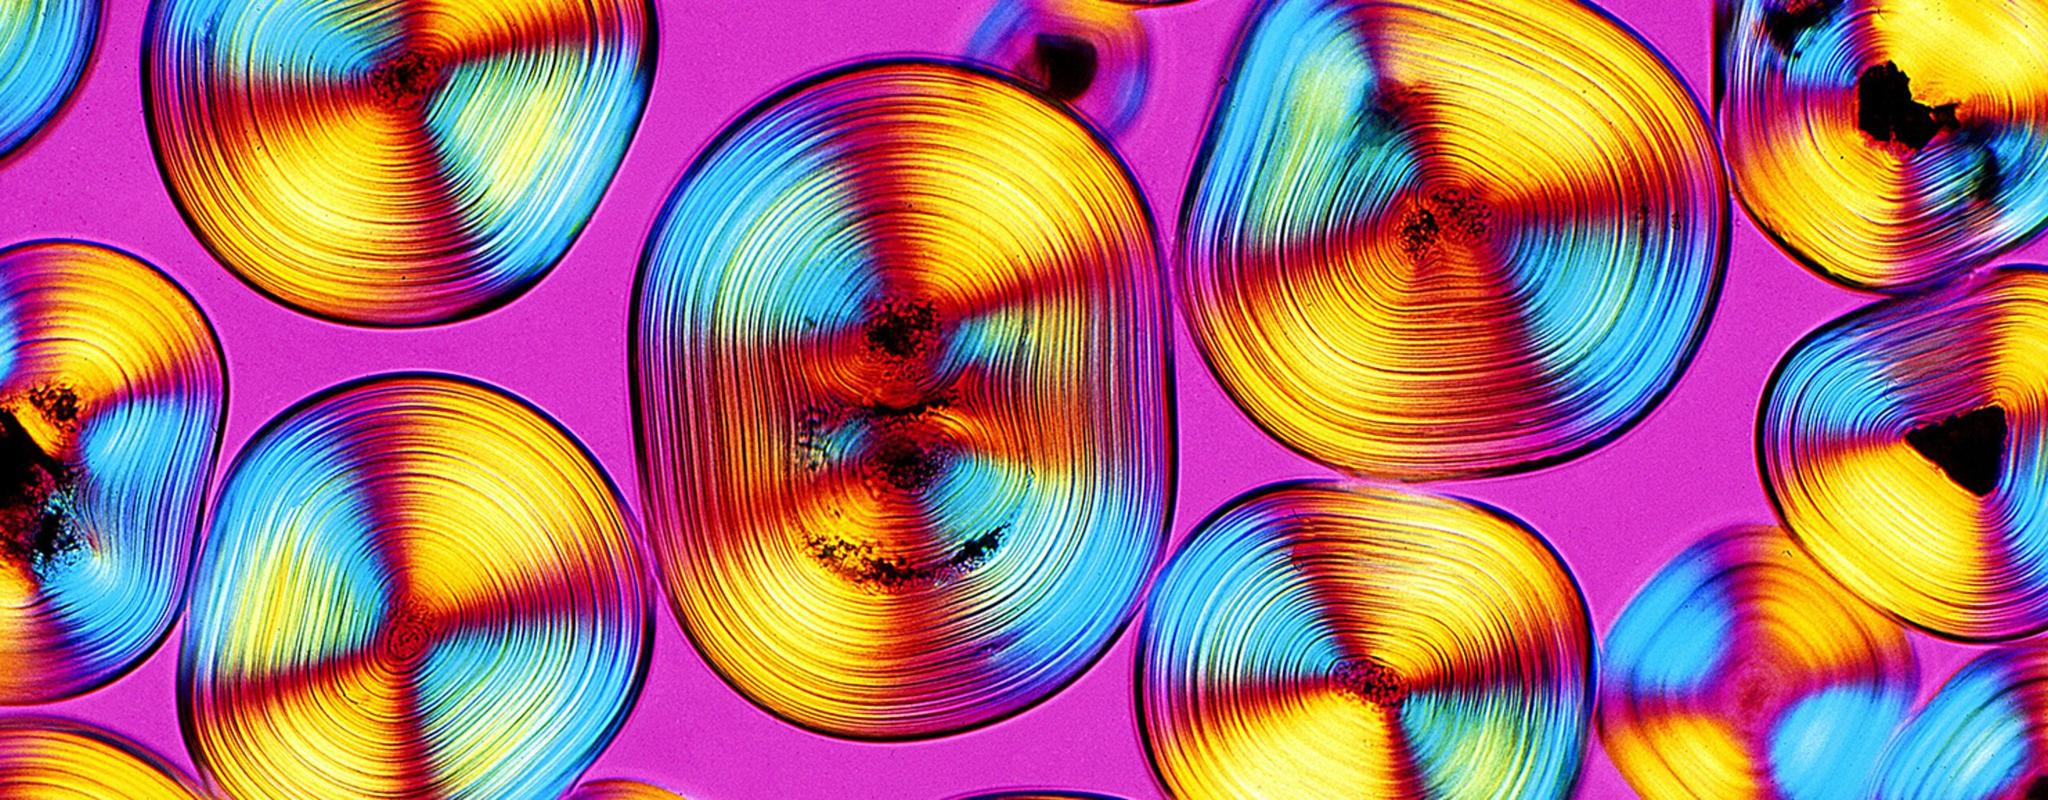 Light micrograph of bladder sand  by Spike Walker